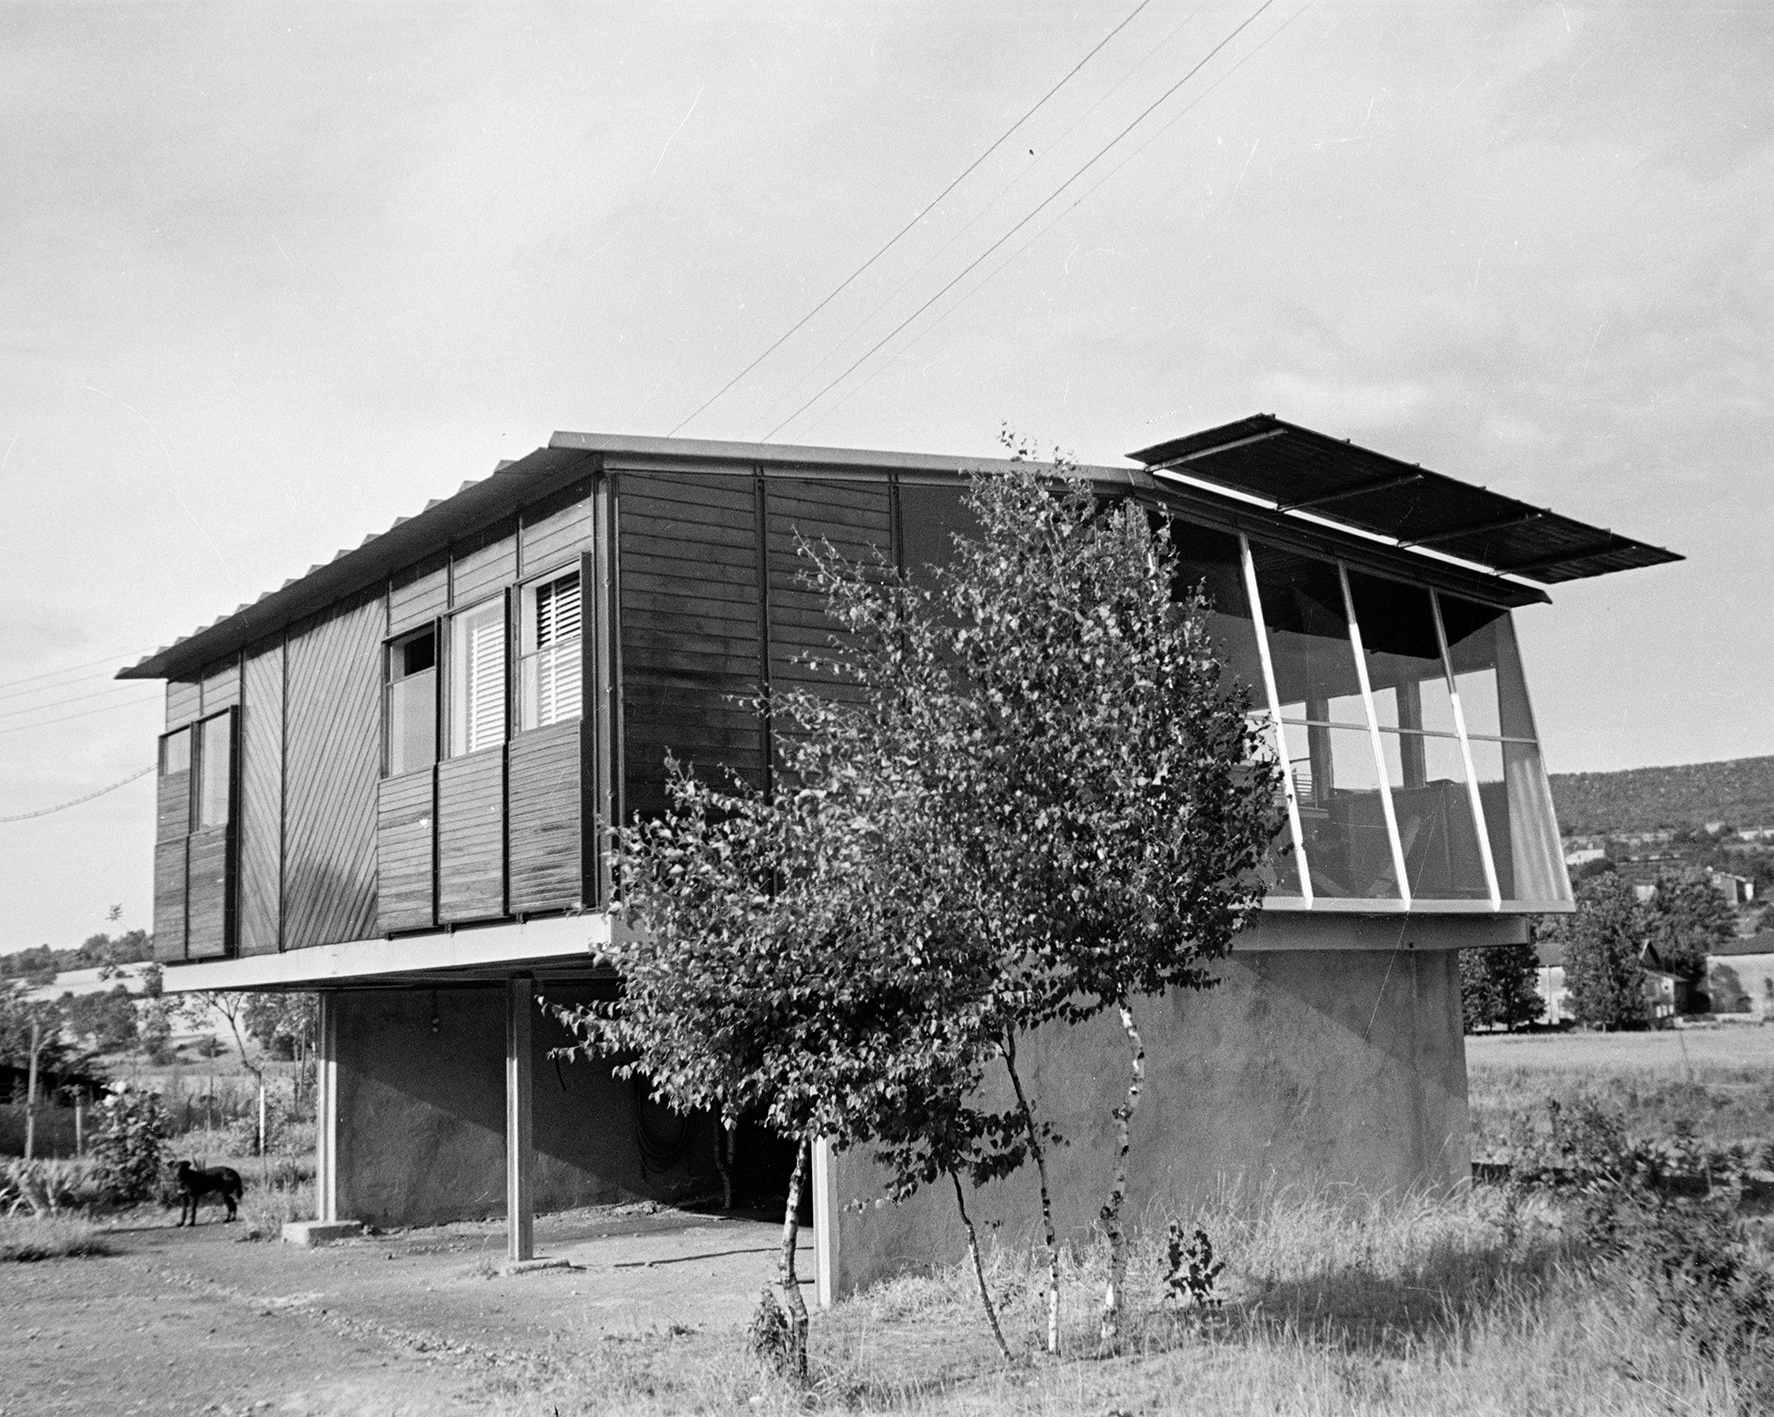 8x8 Demountable house, Jean Prouvé’s office, Maxéville, ca. 1950.